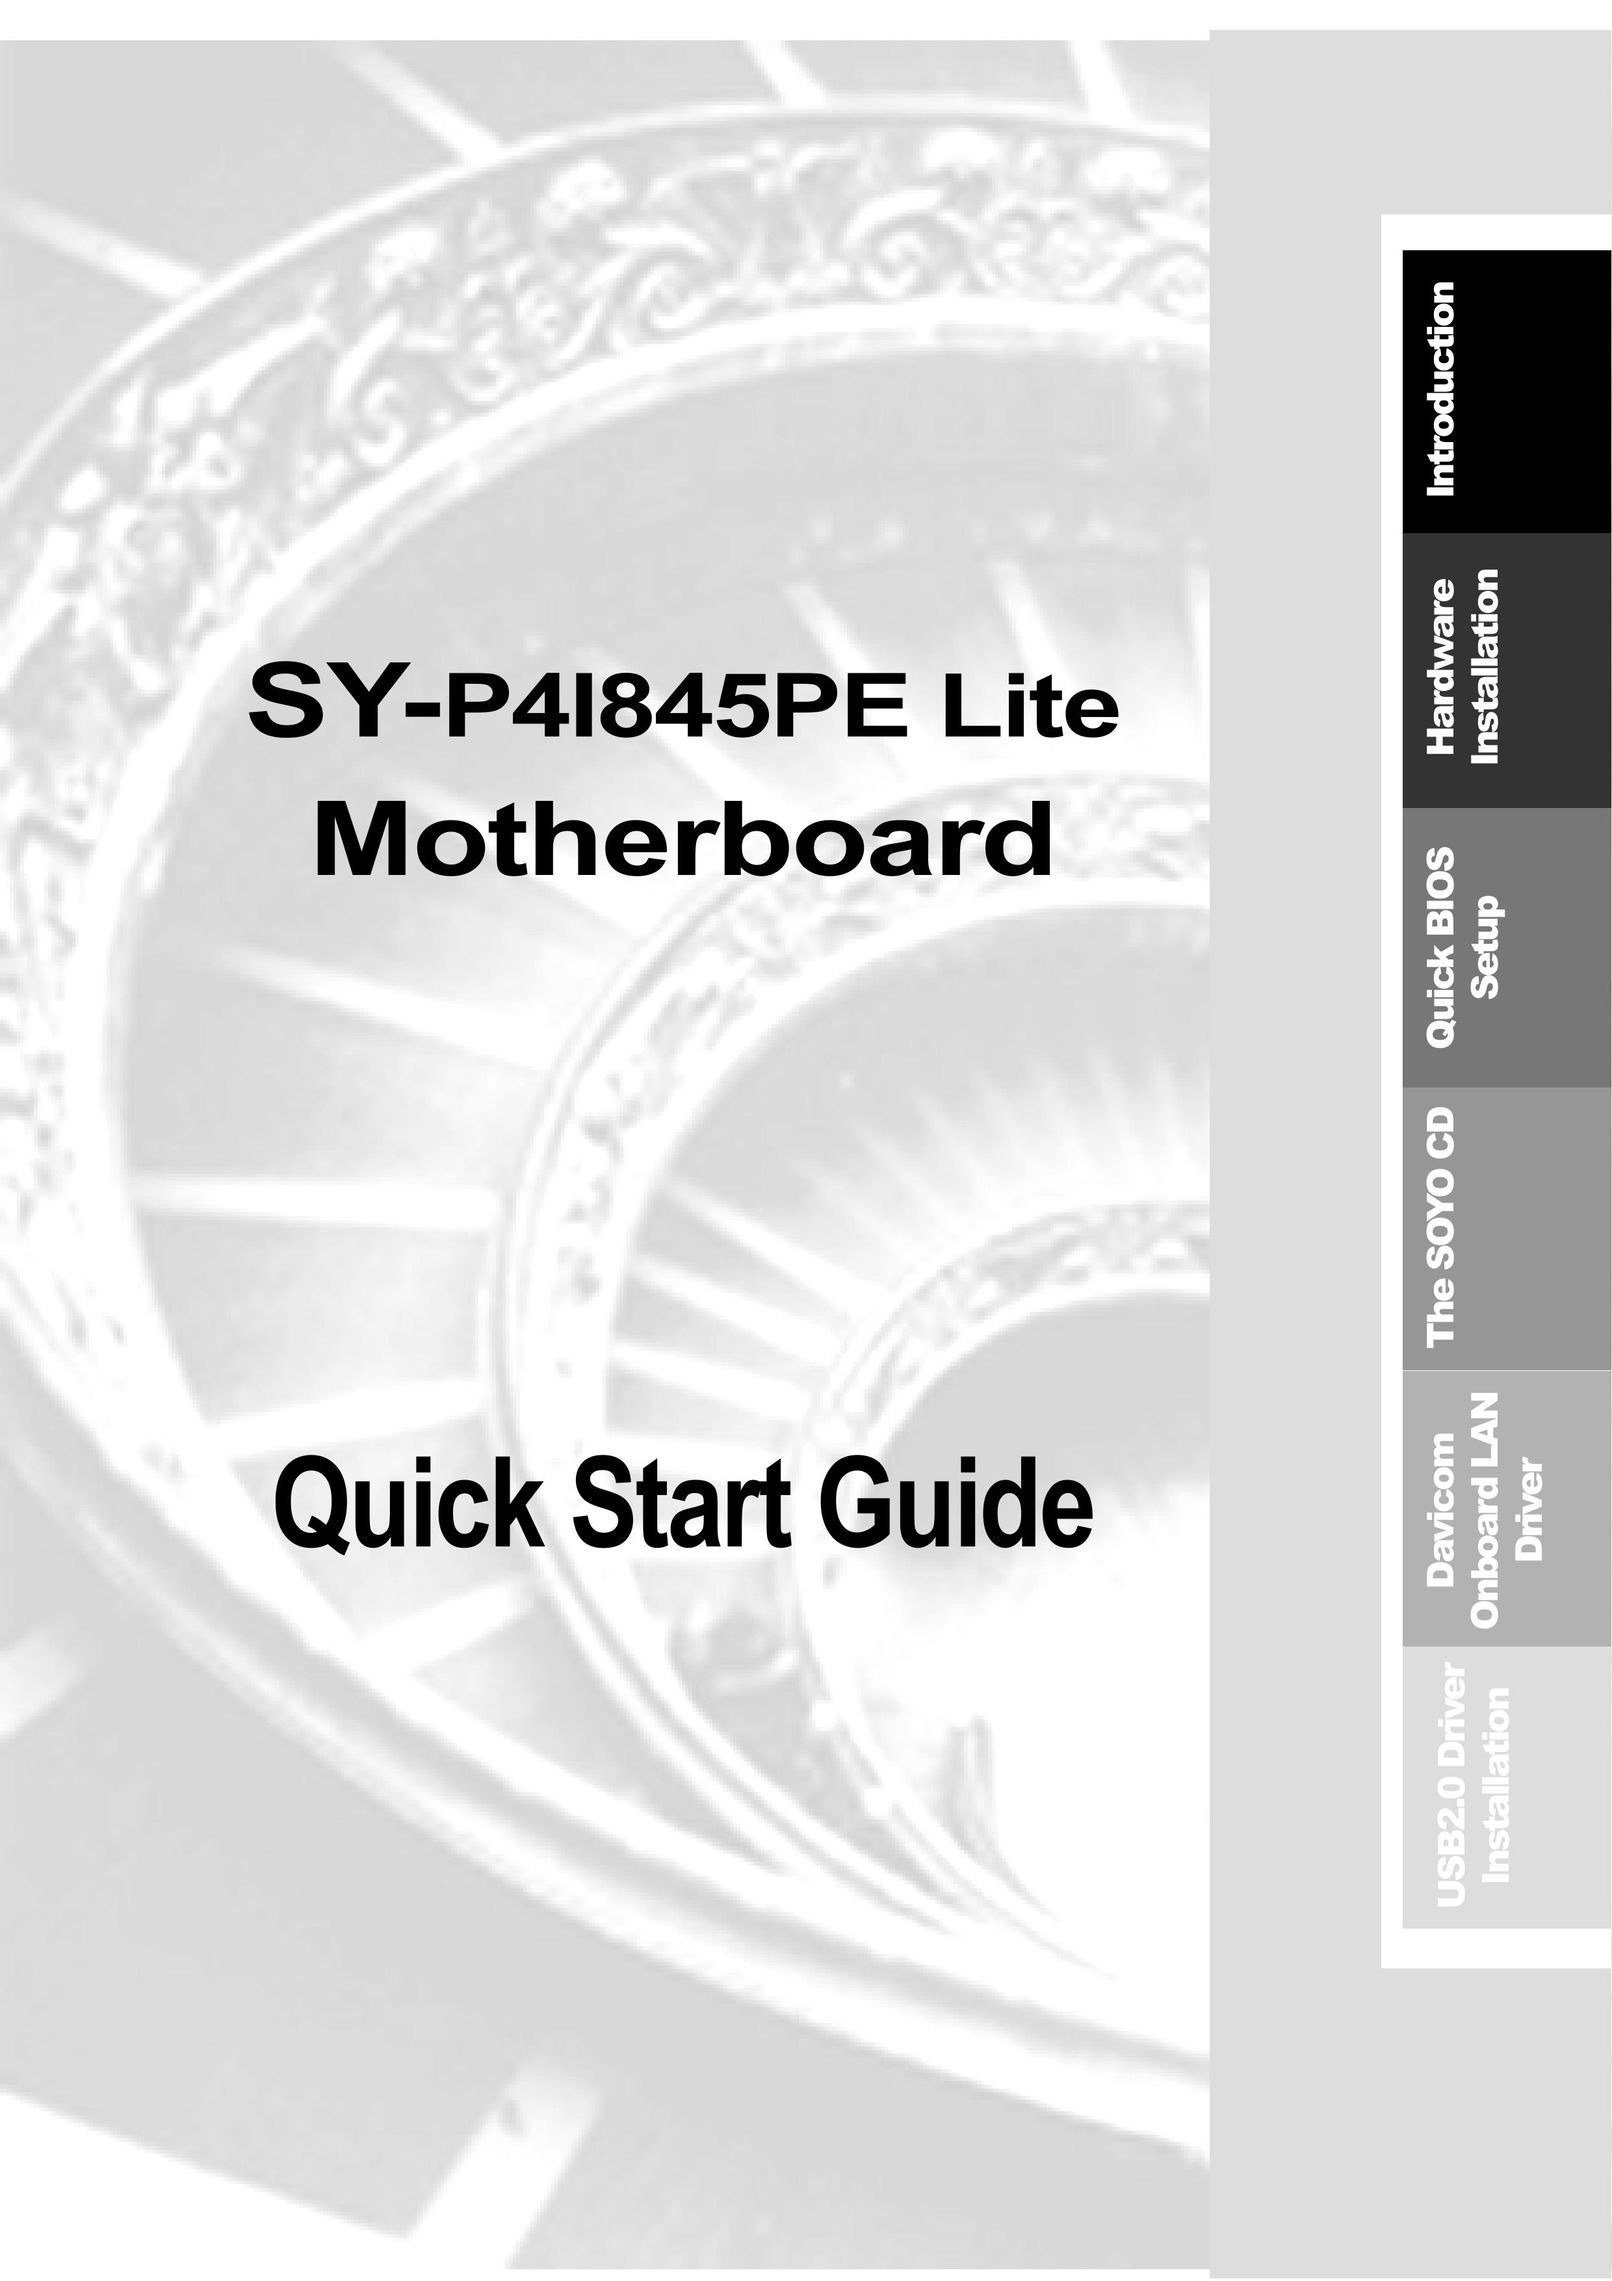 SOYO Lite Motherboard Computer Drive User Manual